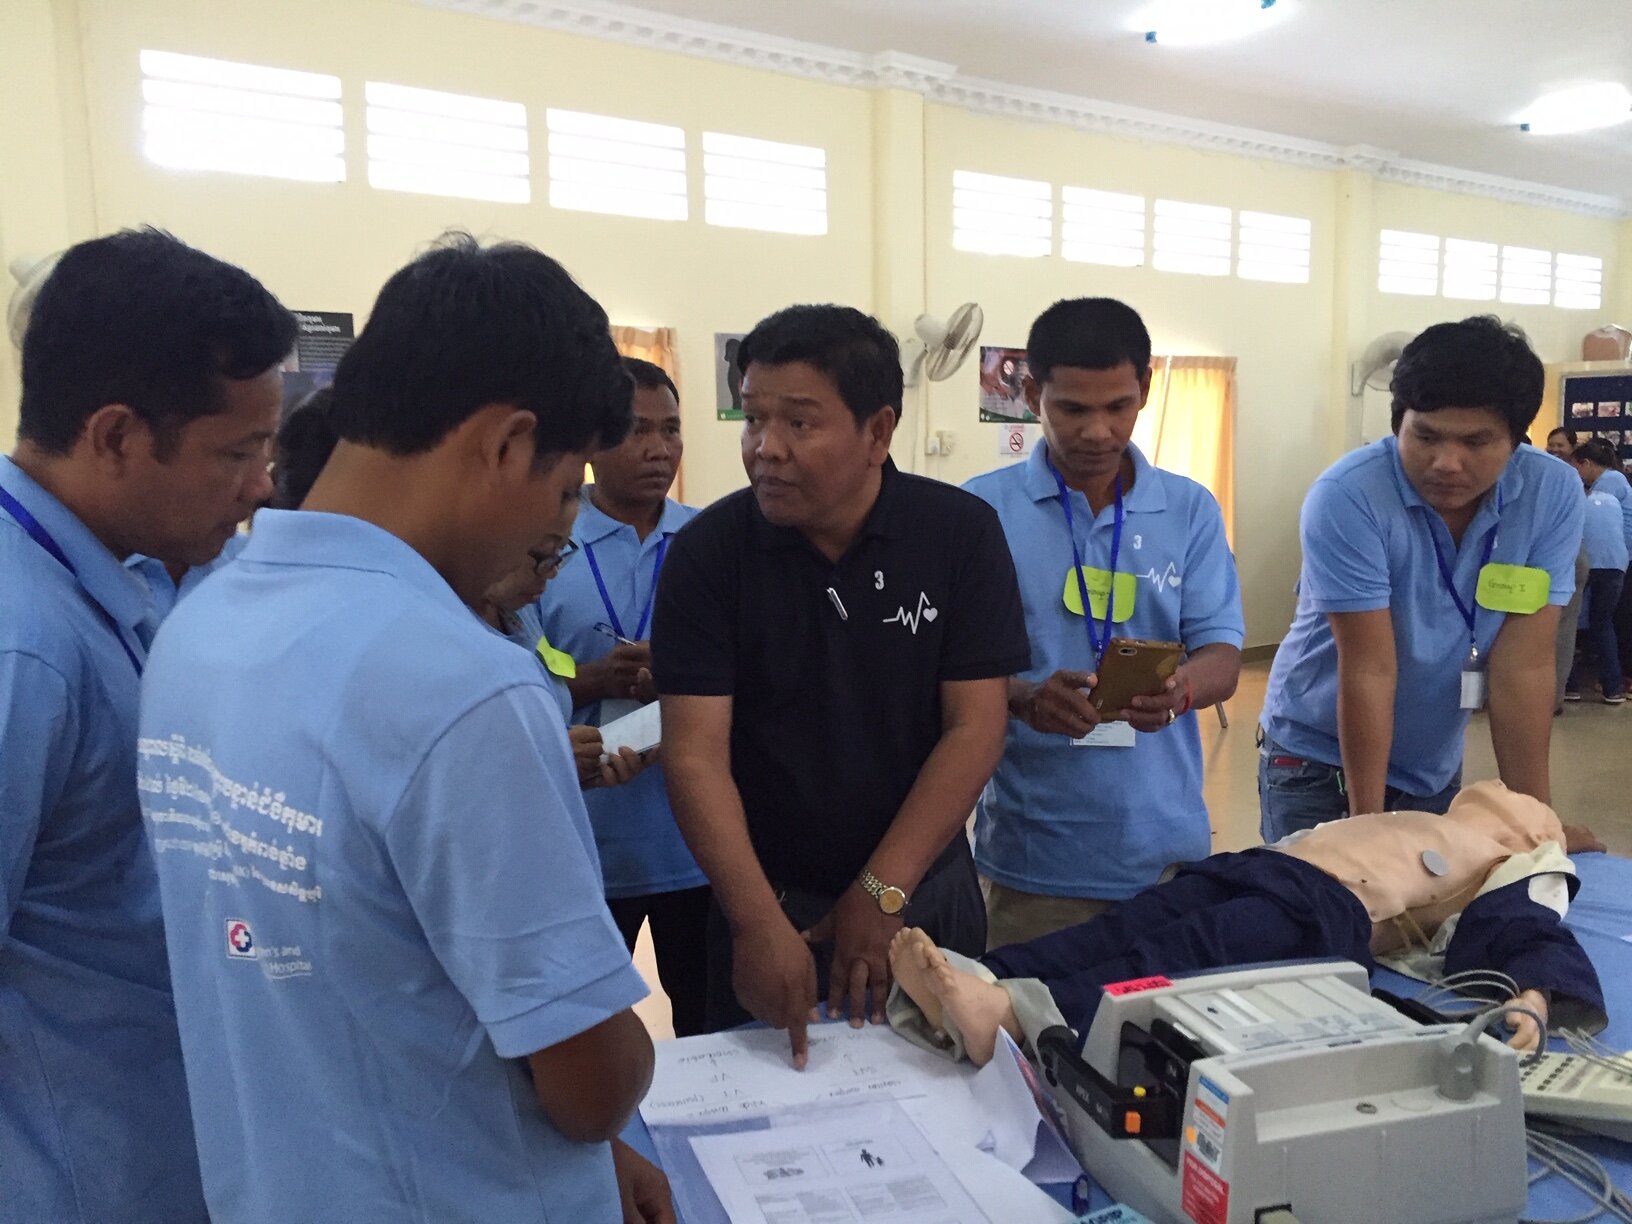 WAH Cambodia KKH medical training siumlation drills.JPG